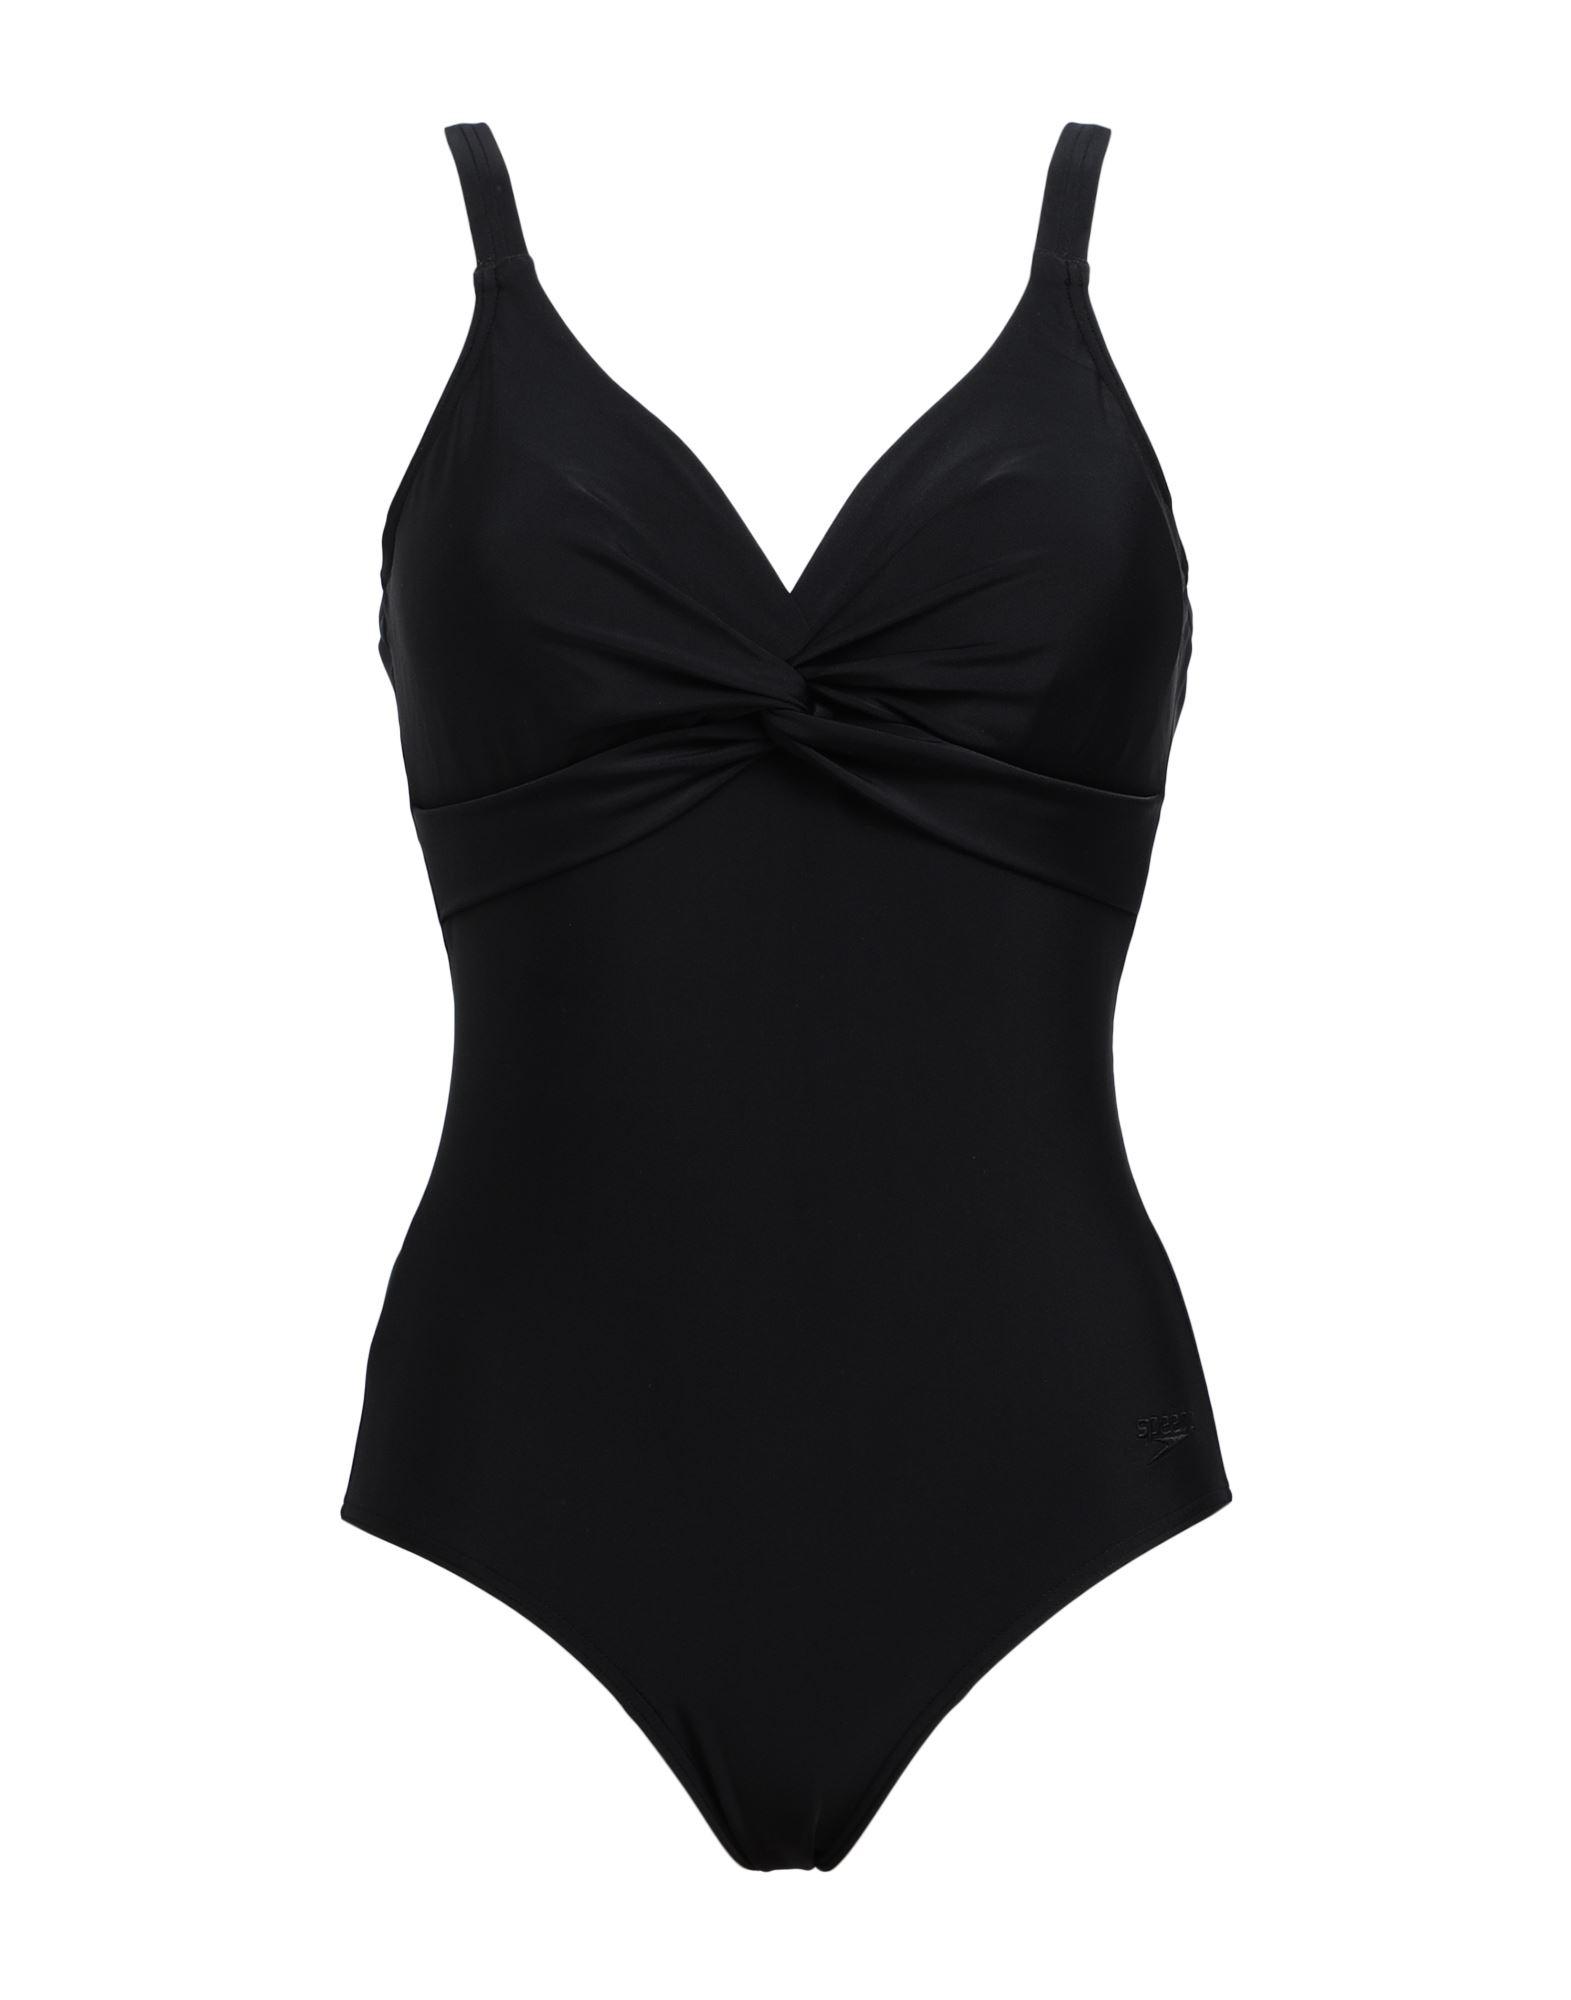 Speedo One-piece Swimsuit in Black | Lyst